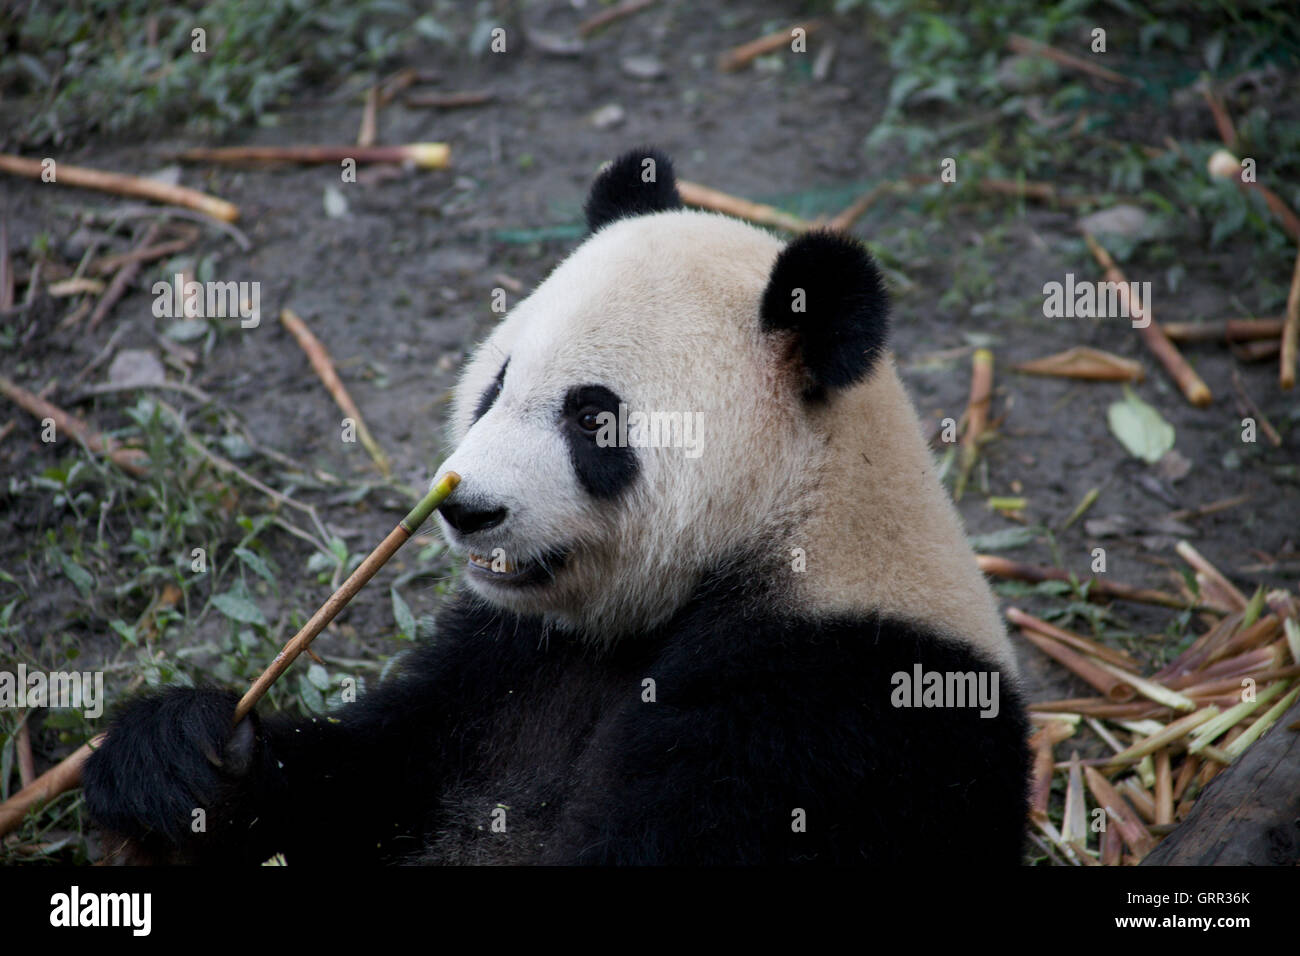 A giant panda (Ailuropoda melanoleuca) at the Chengdu Panda Sanctuary enjoys some bamboo Stock Photo